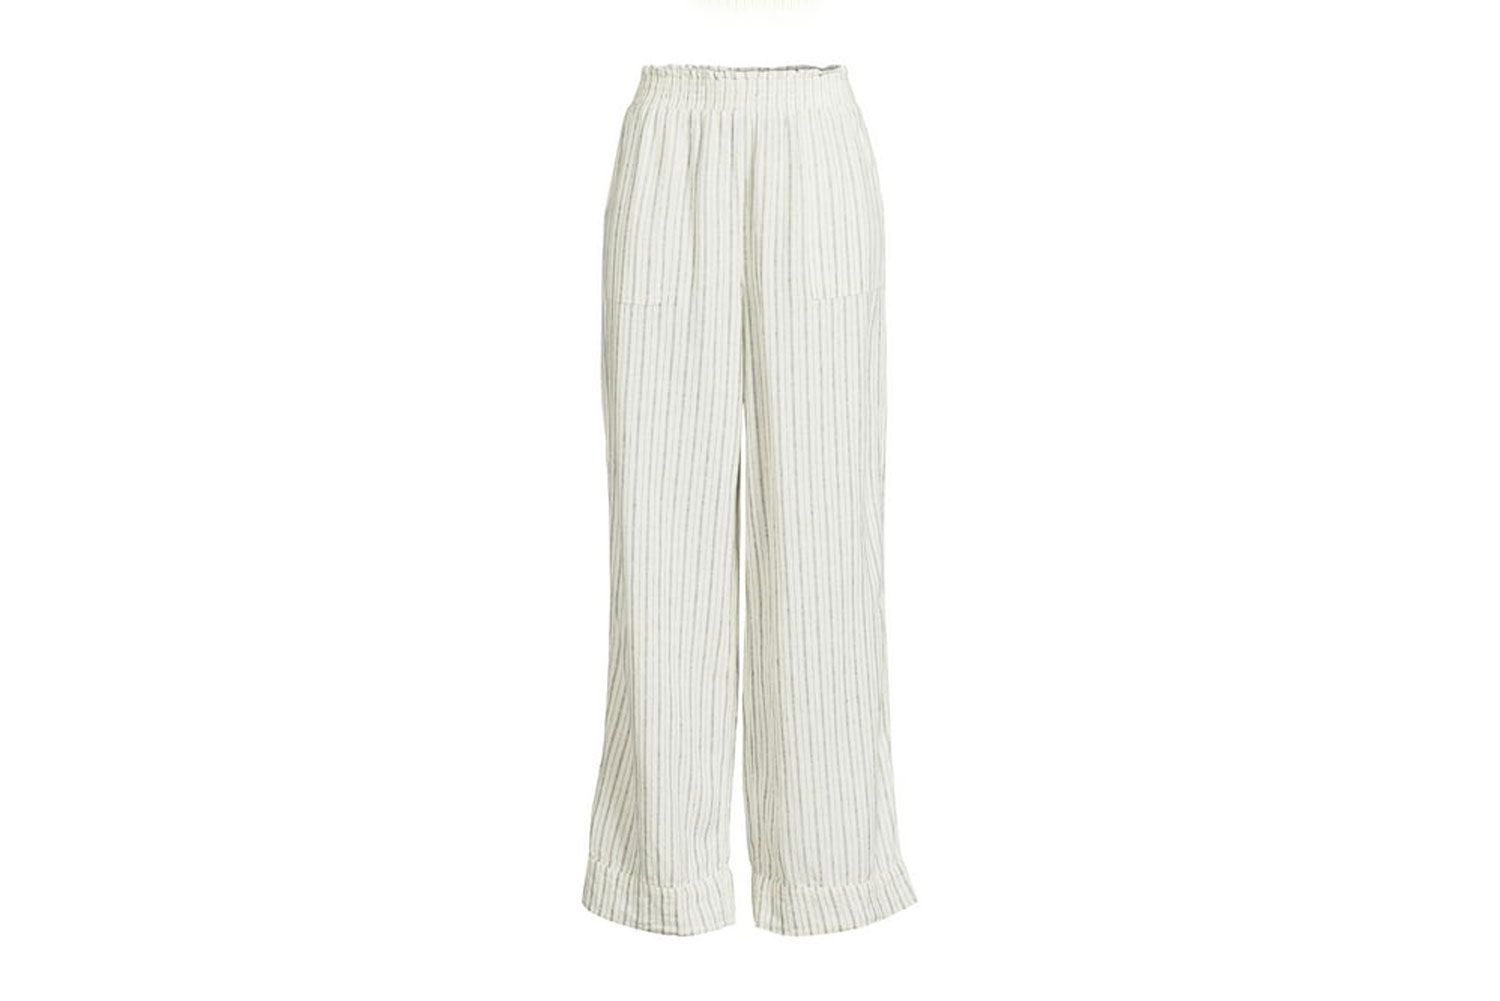 Walmart Time and Tru Women's Linen Blend Pants with Smocked Waist, 29" Inseam, Sizes XS-XXXL